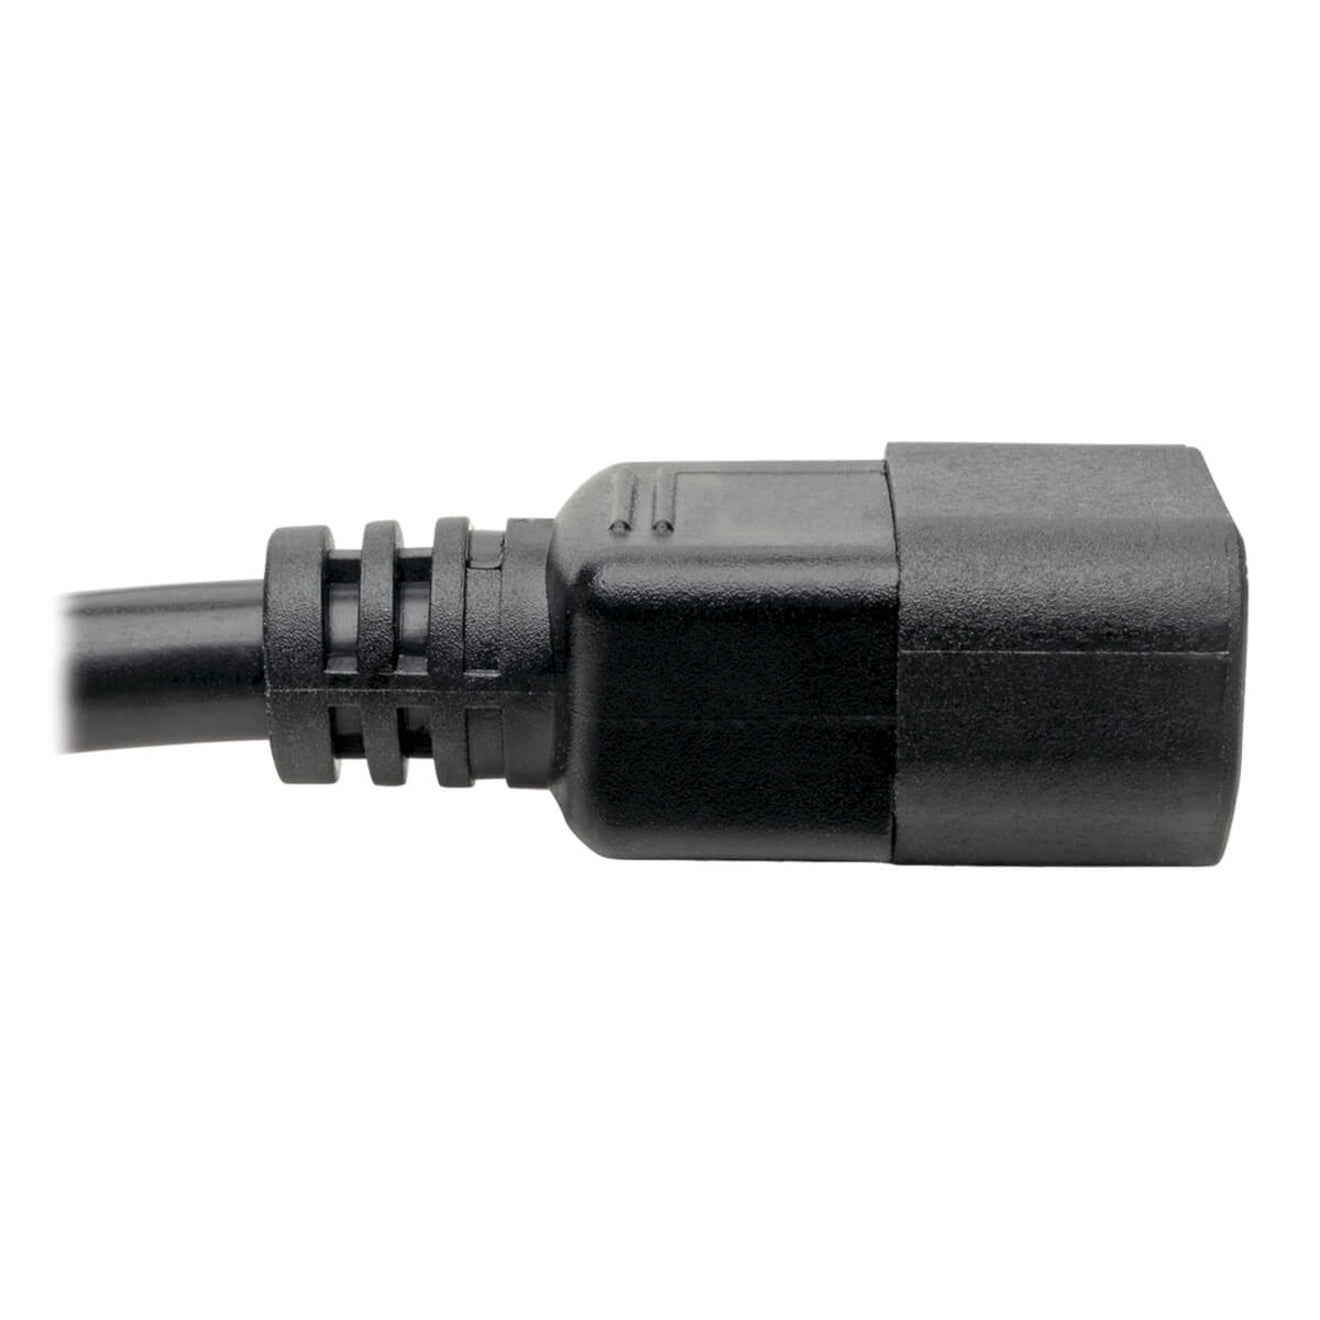 Tripp Lite P005-L10 Power Extension Cord, 10 ft, Black, Lifetime Warranty